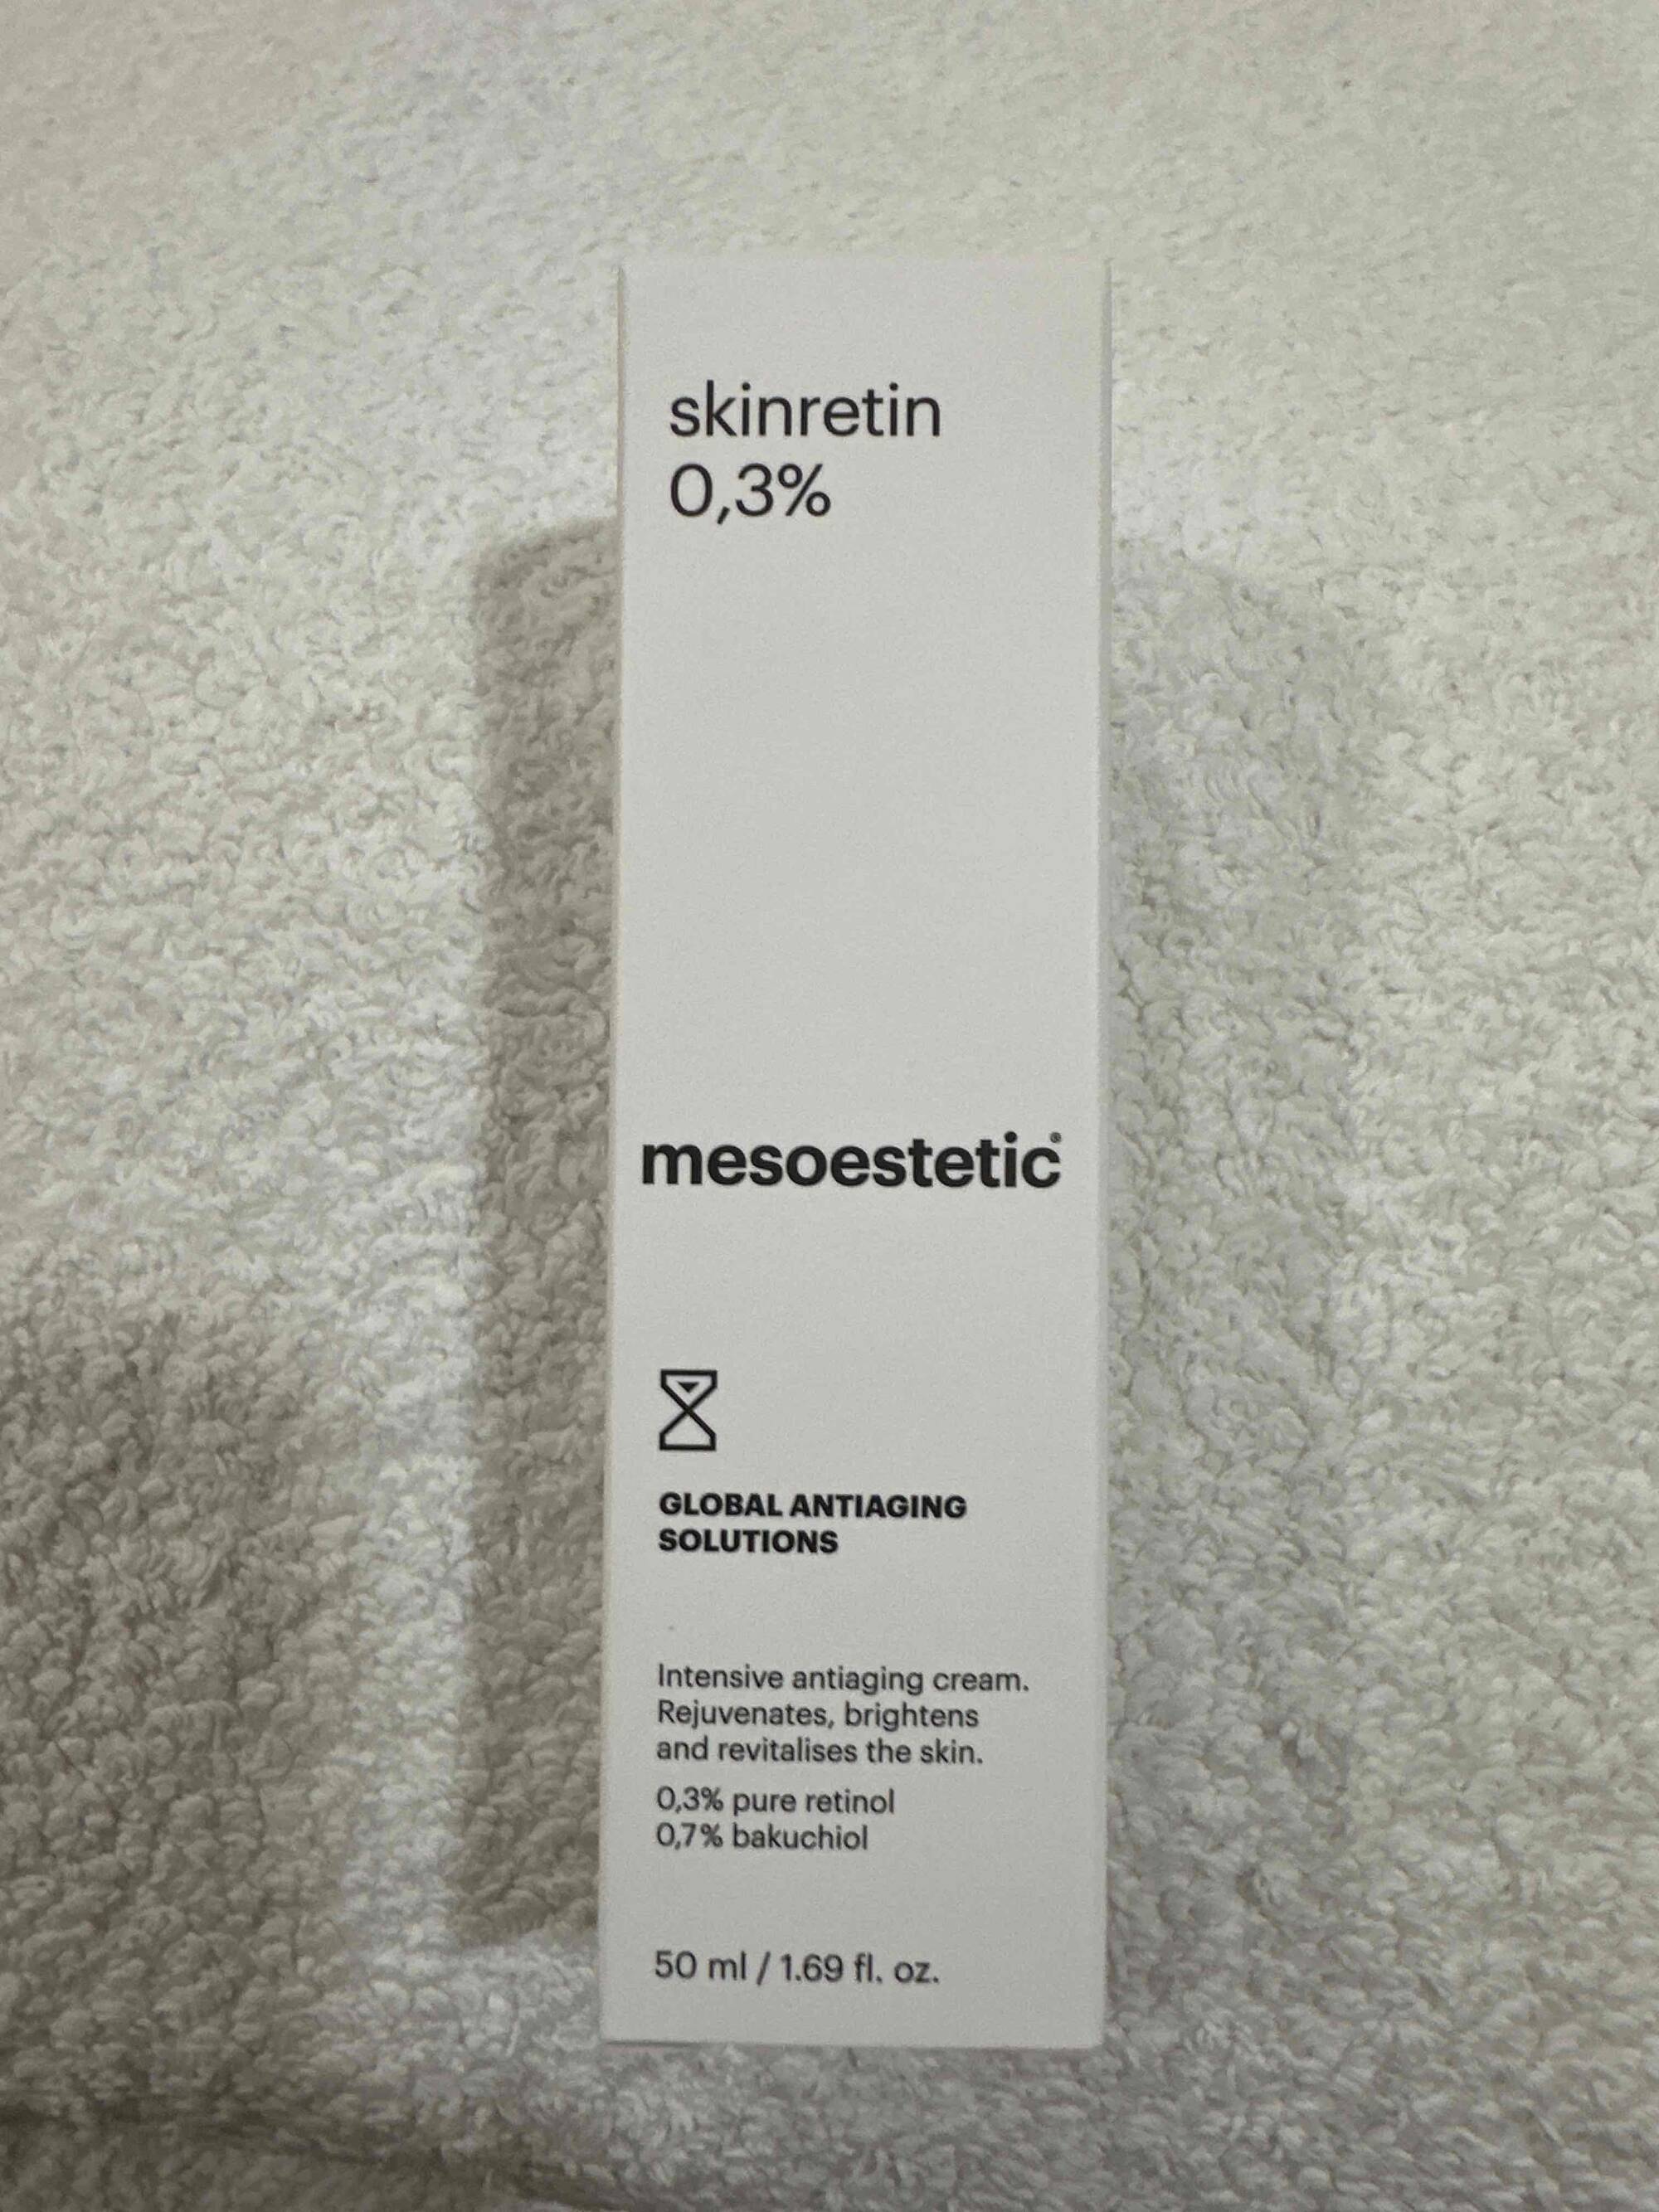 MESOESTETIC - Skinretin 0.3% - Global antiaging solutions